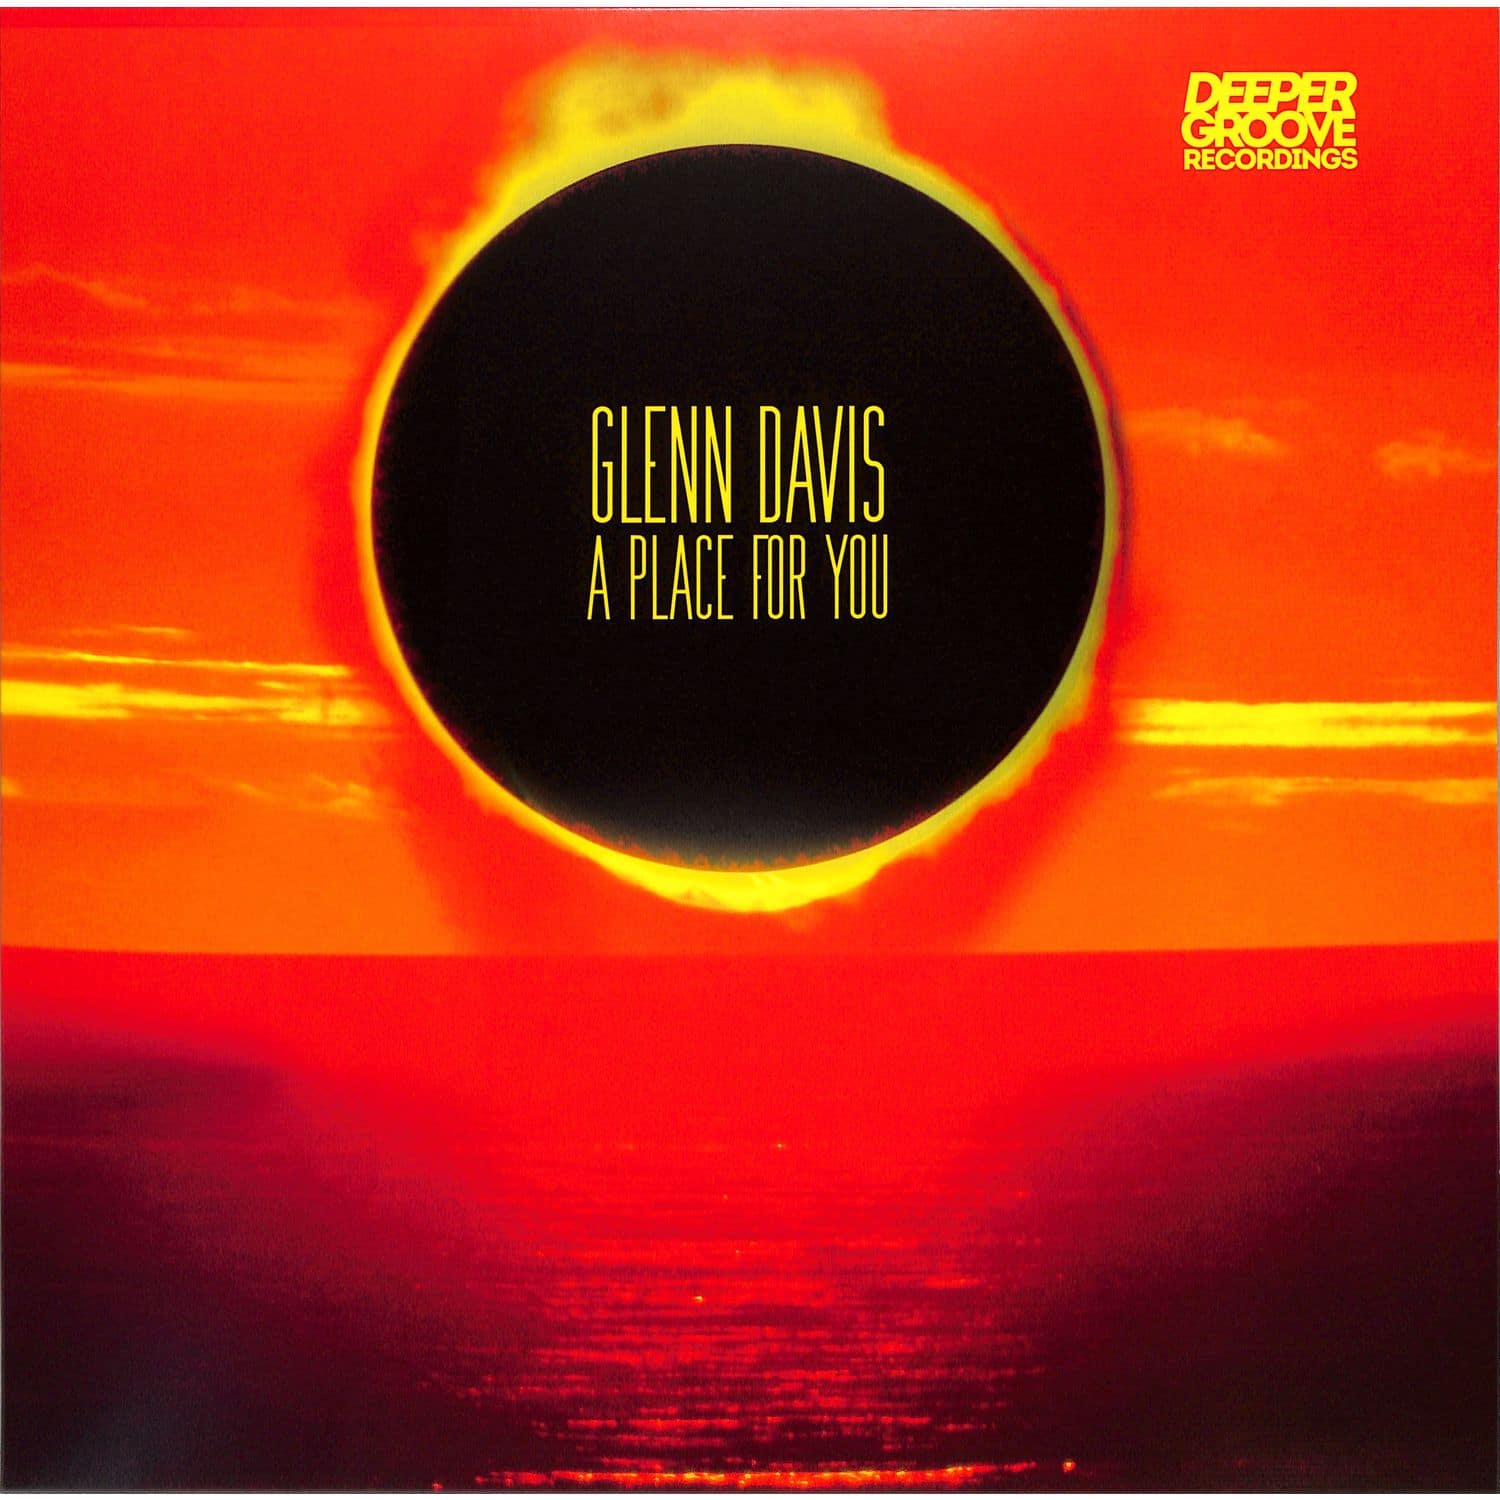 Glenn Davis - A PLACE FOR YOU